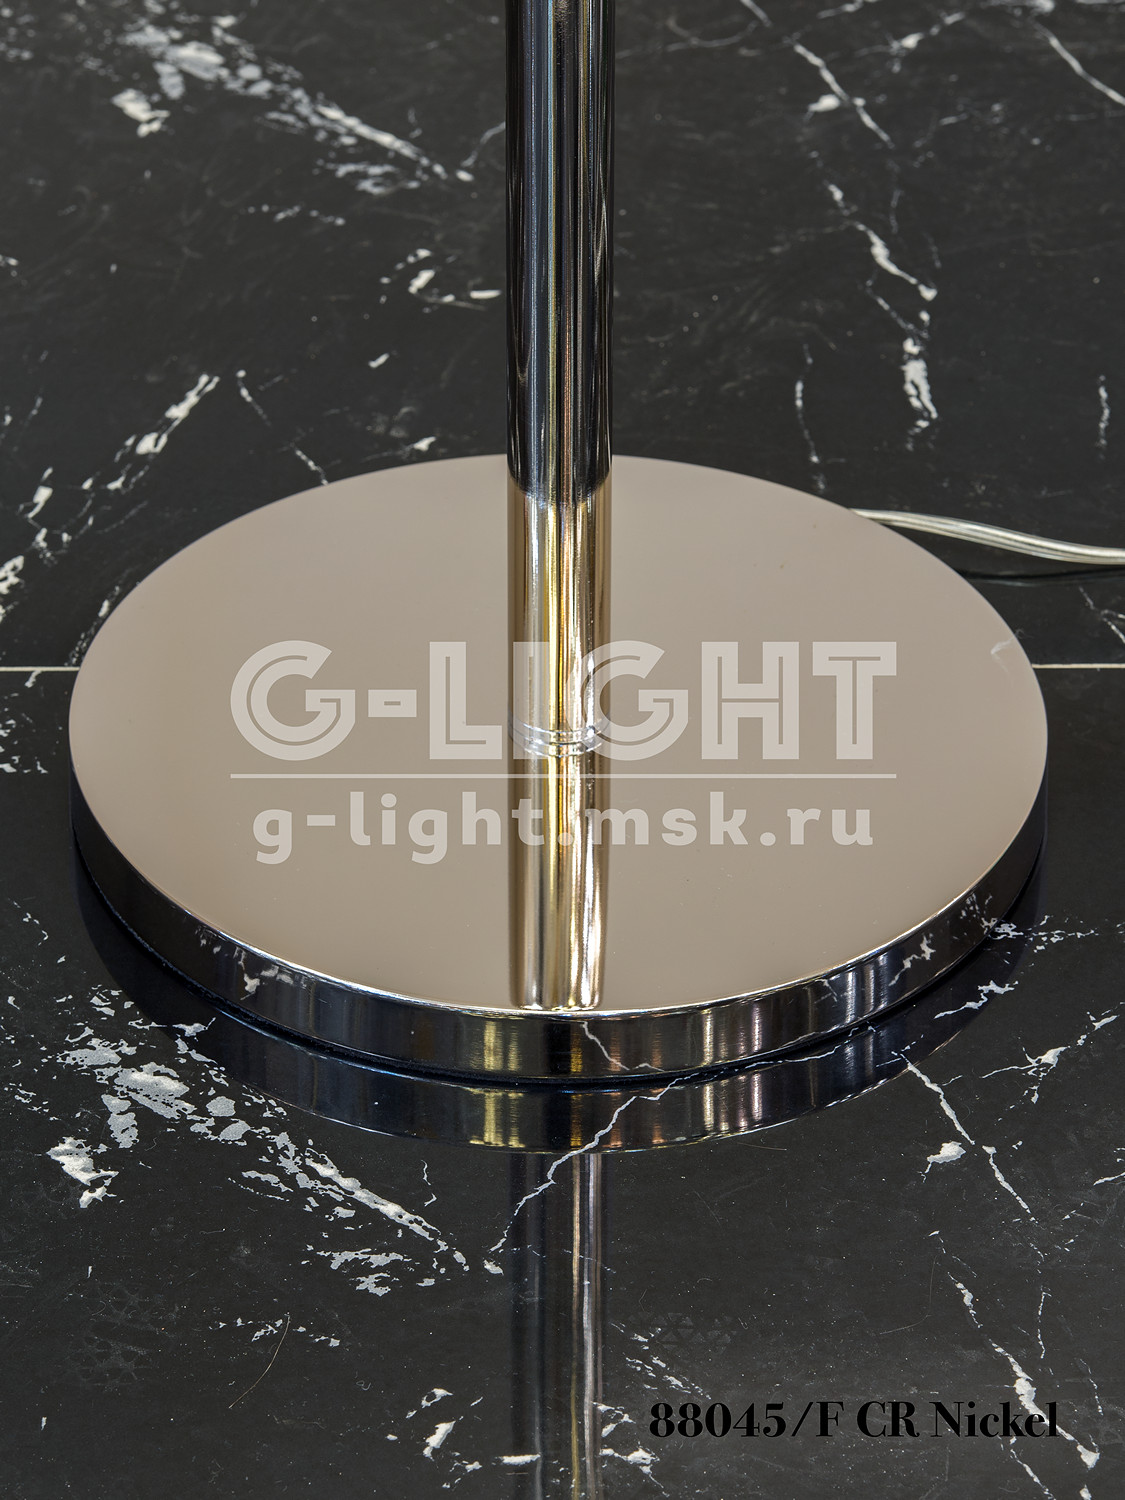 Торшер G-Light 88045/F CR Nickel - изображение 2